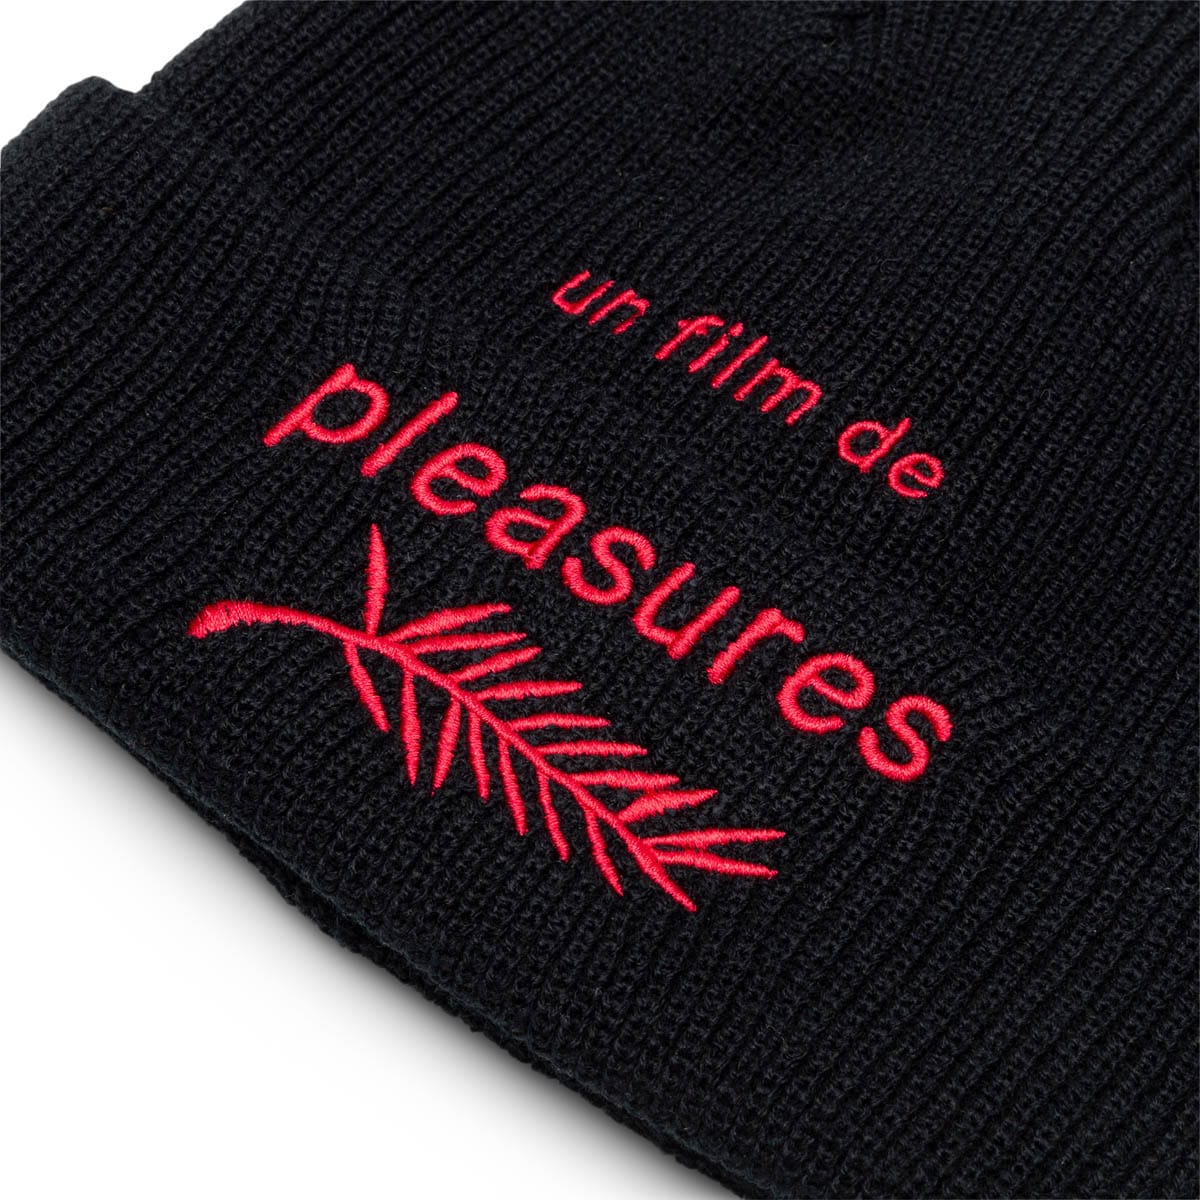 Pleasures Headwear BLACK / O/S FILM BEANIE